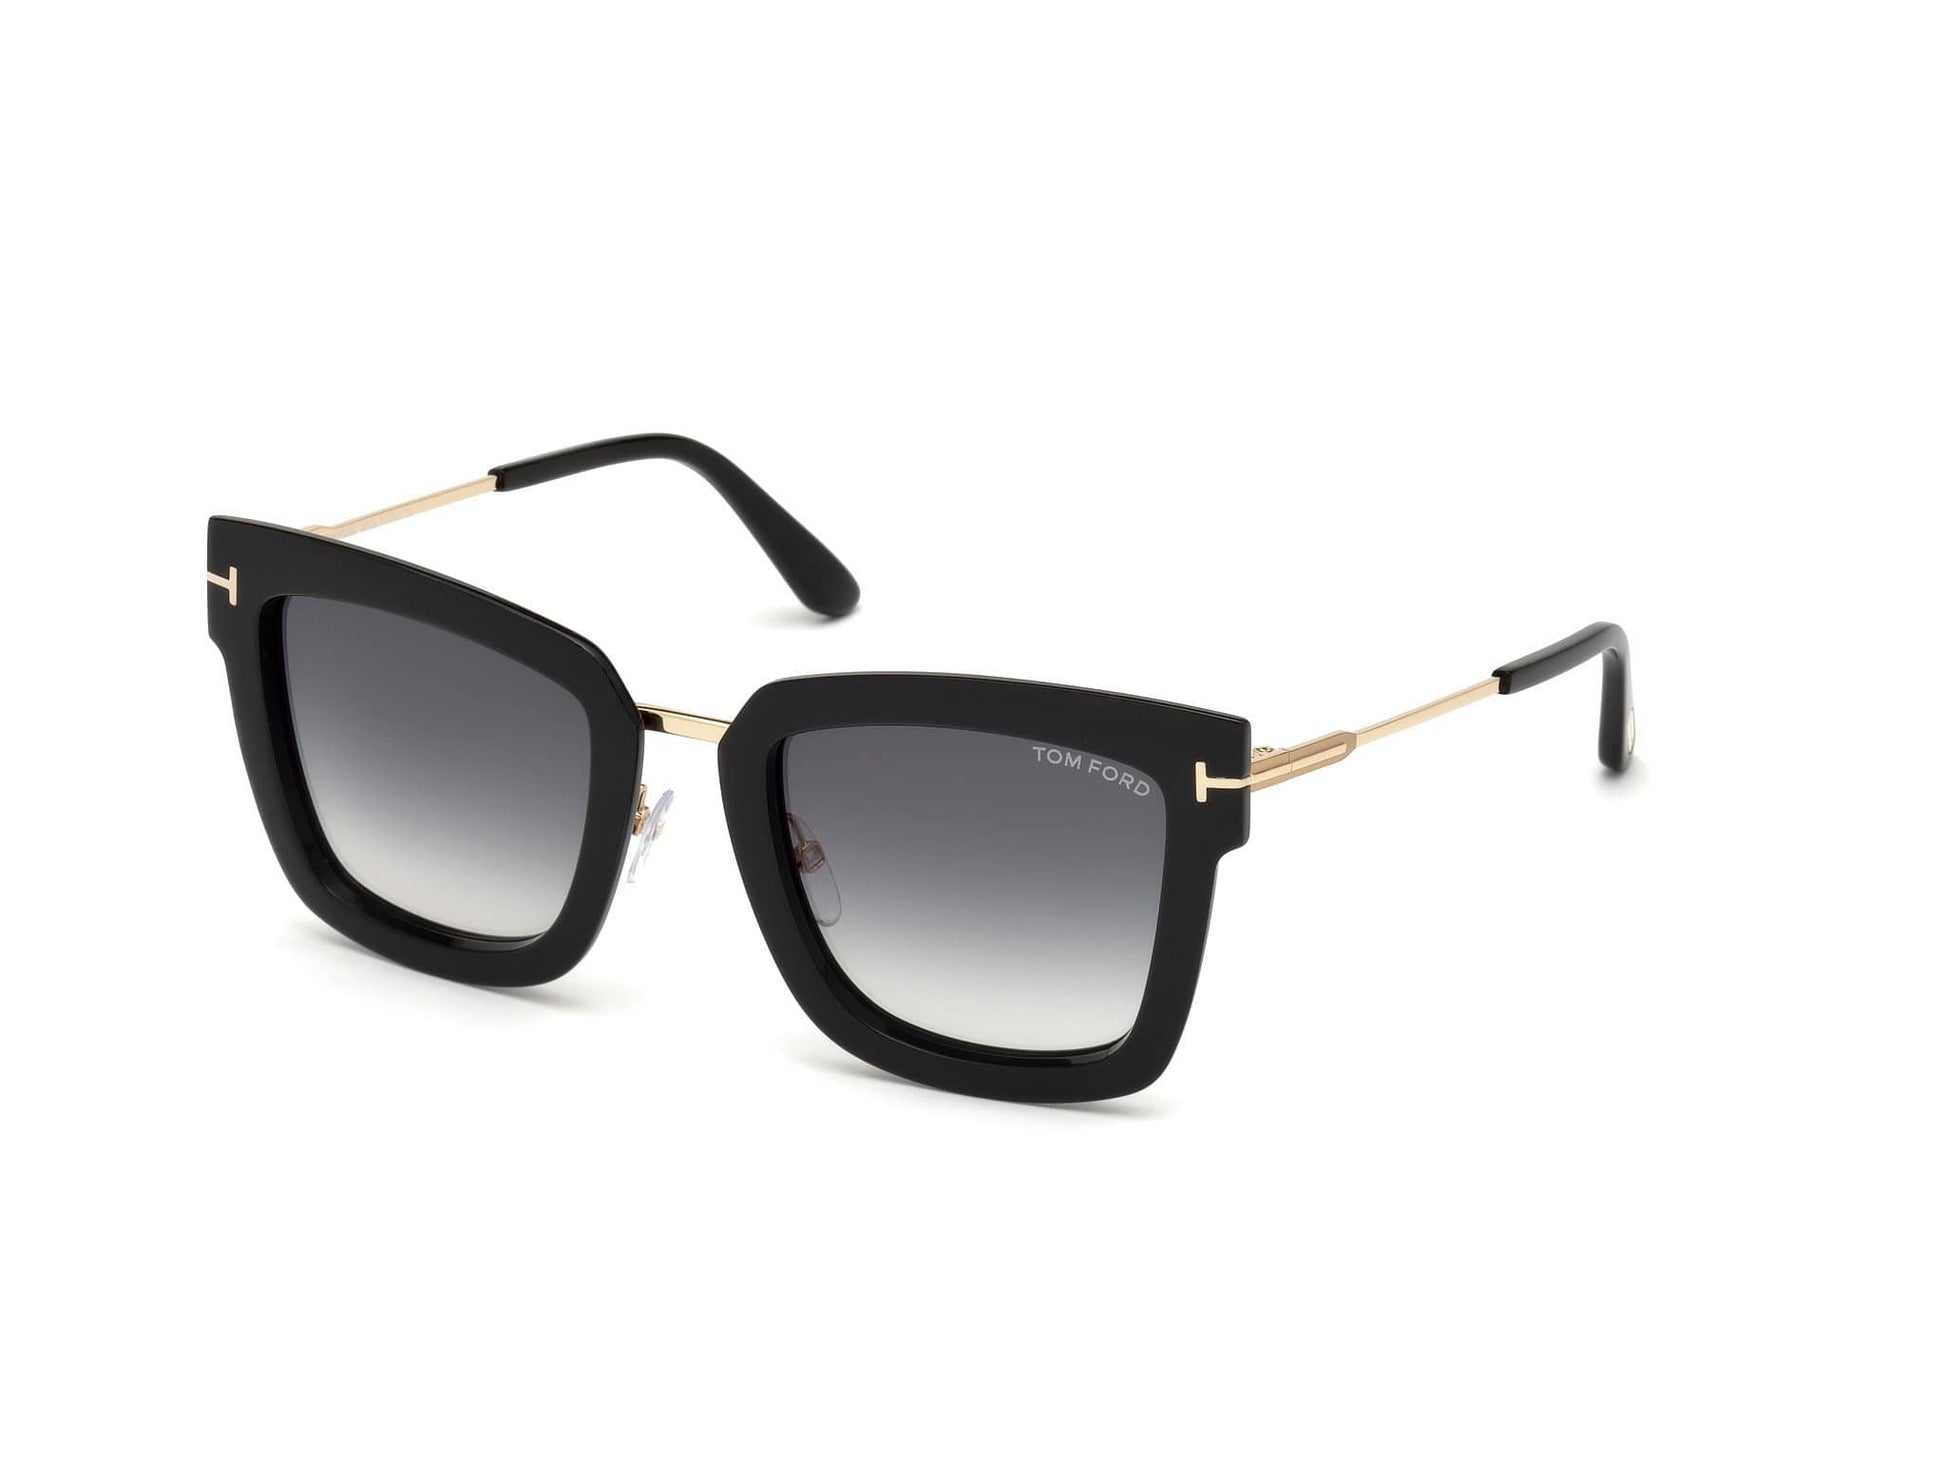 Tom Ford FT0573 Lara-02 Geometric Sunglasses 01B-01B - Shiny Black, Rose Gold/ Gradient Smoke Lenses